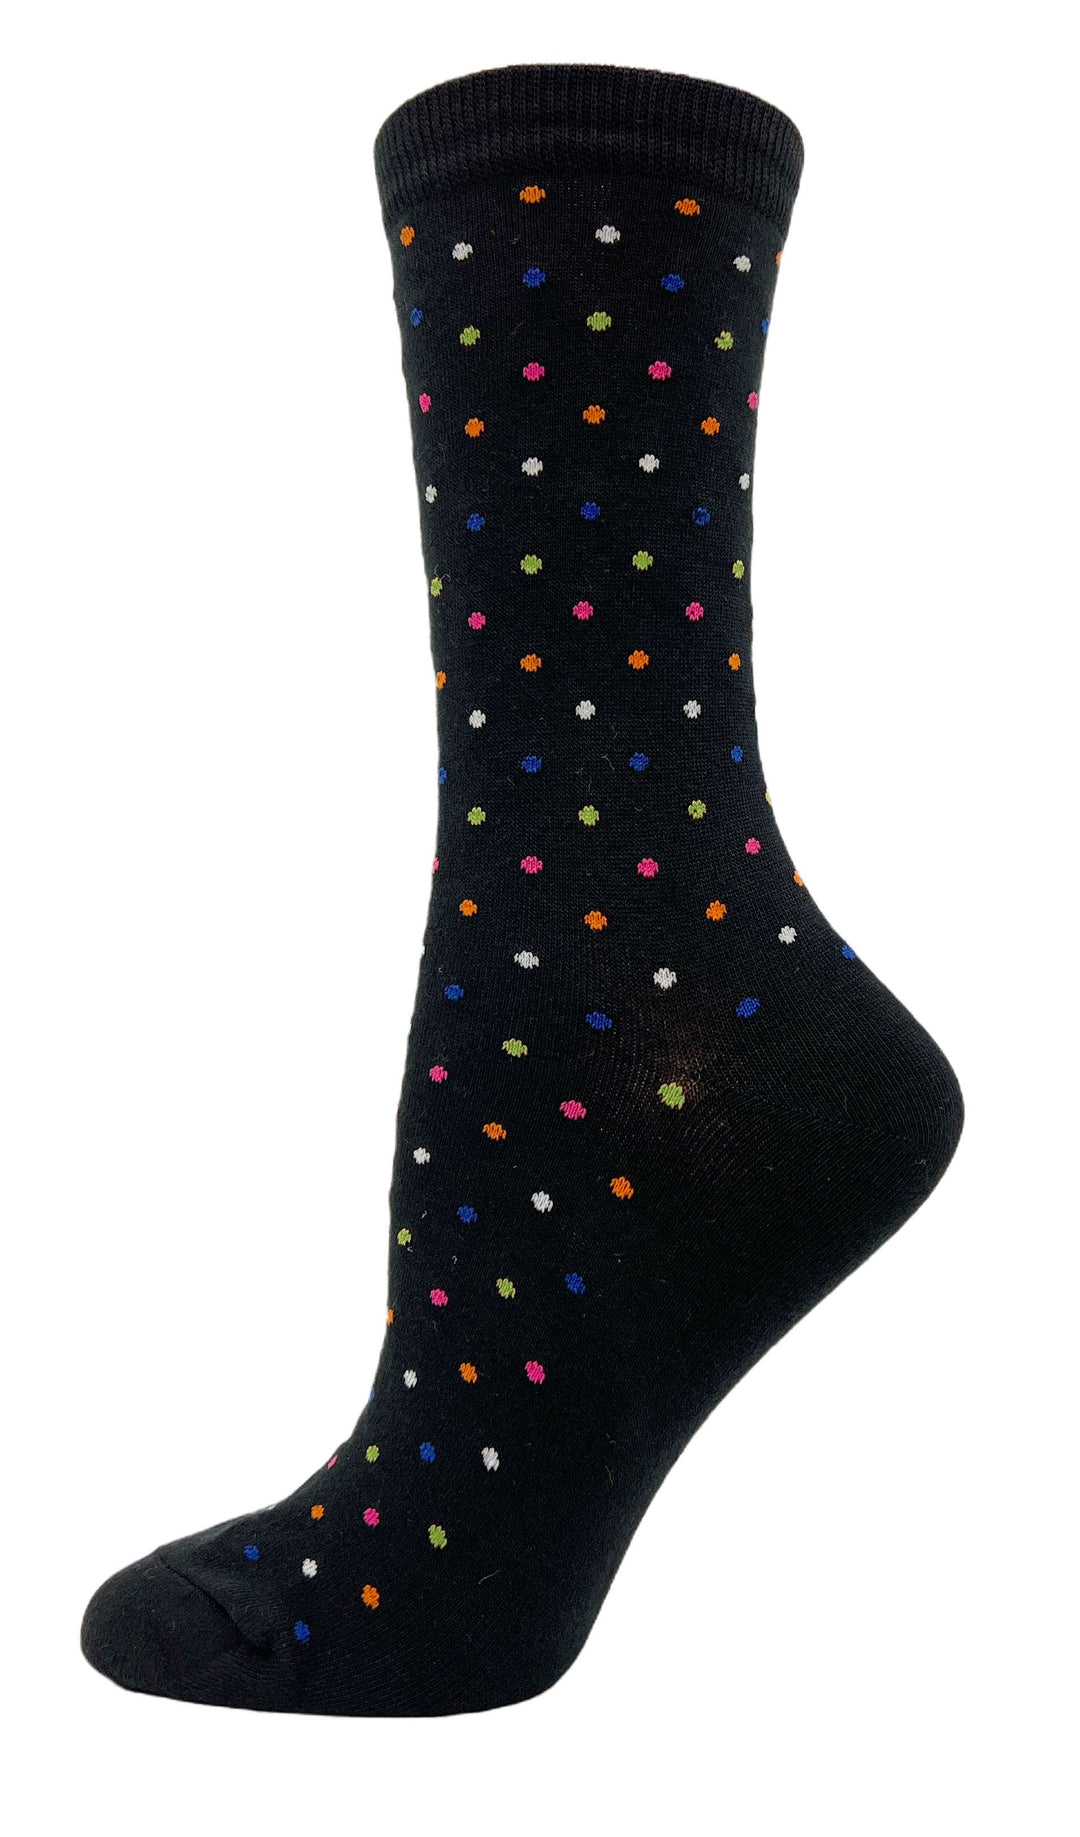 "Bright Dots" Cotton Dress Socks by Point Zero - Medium